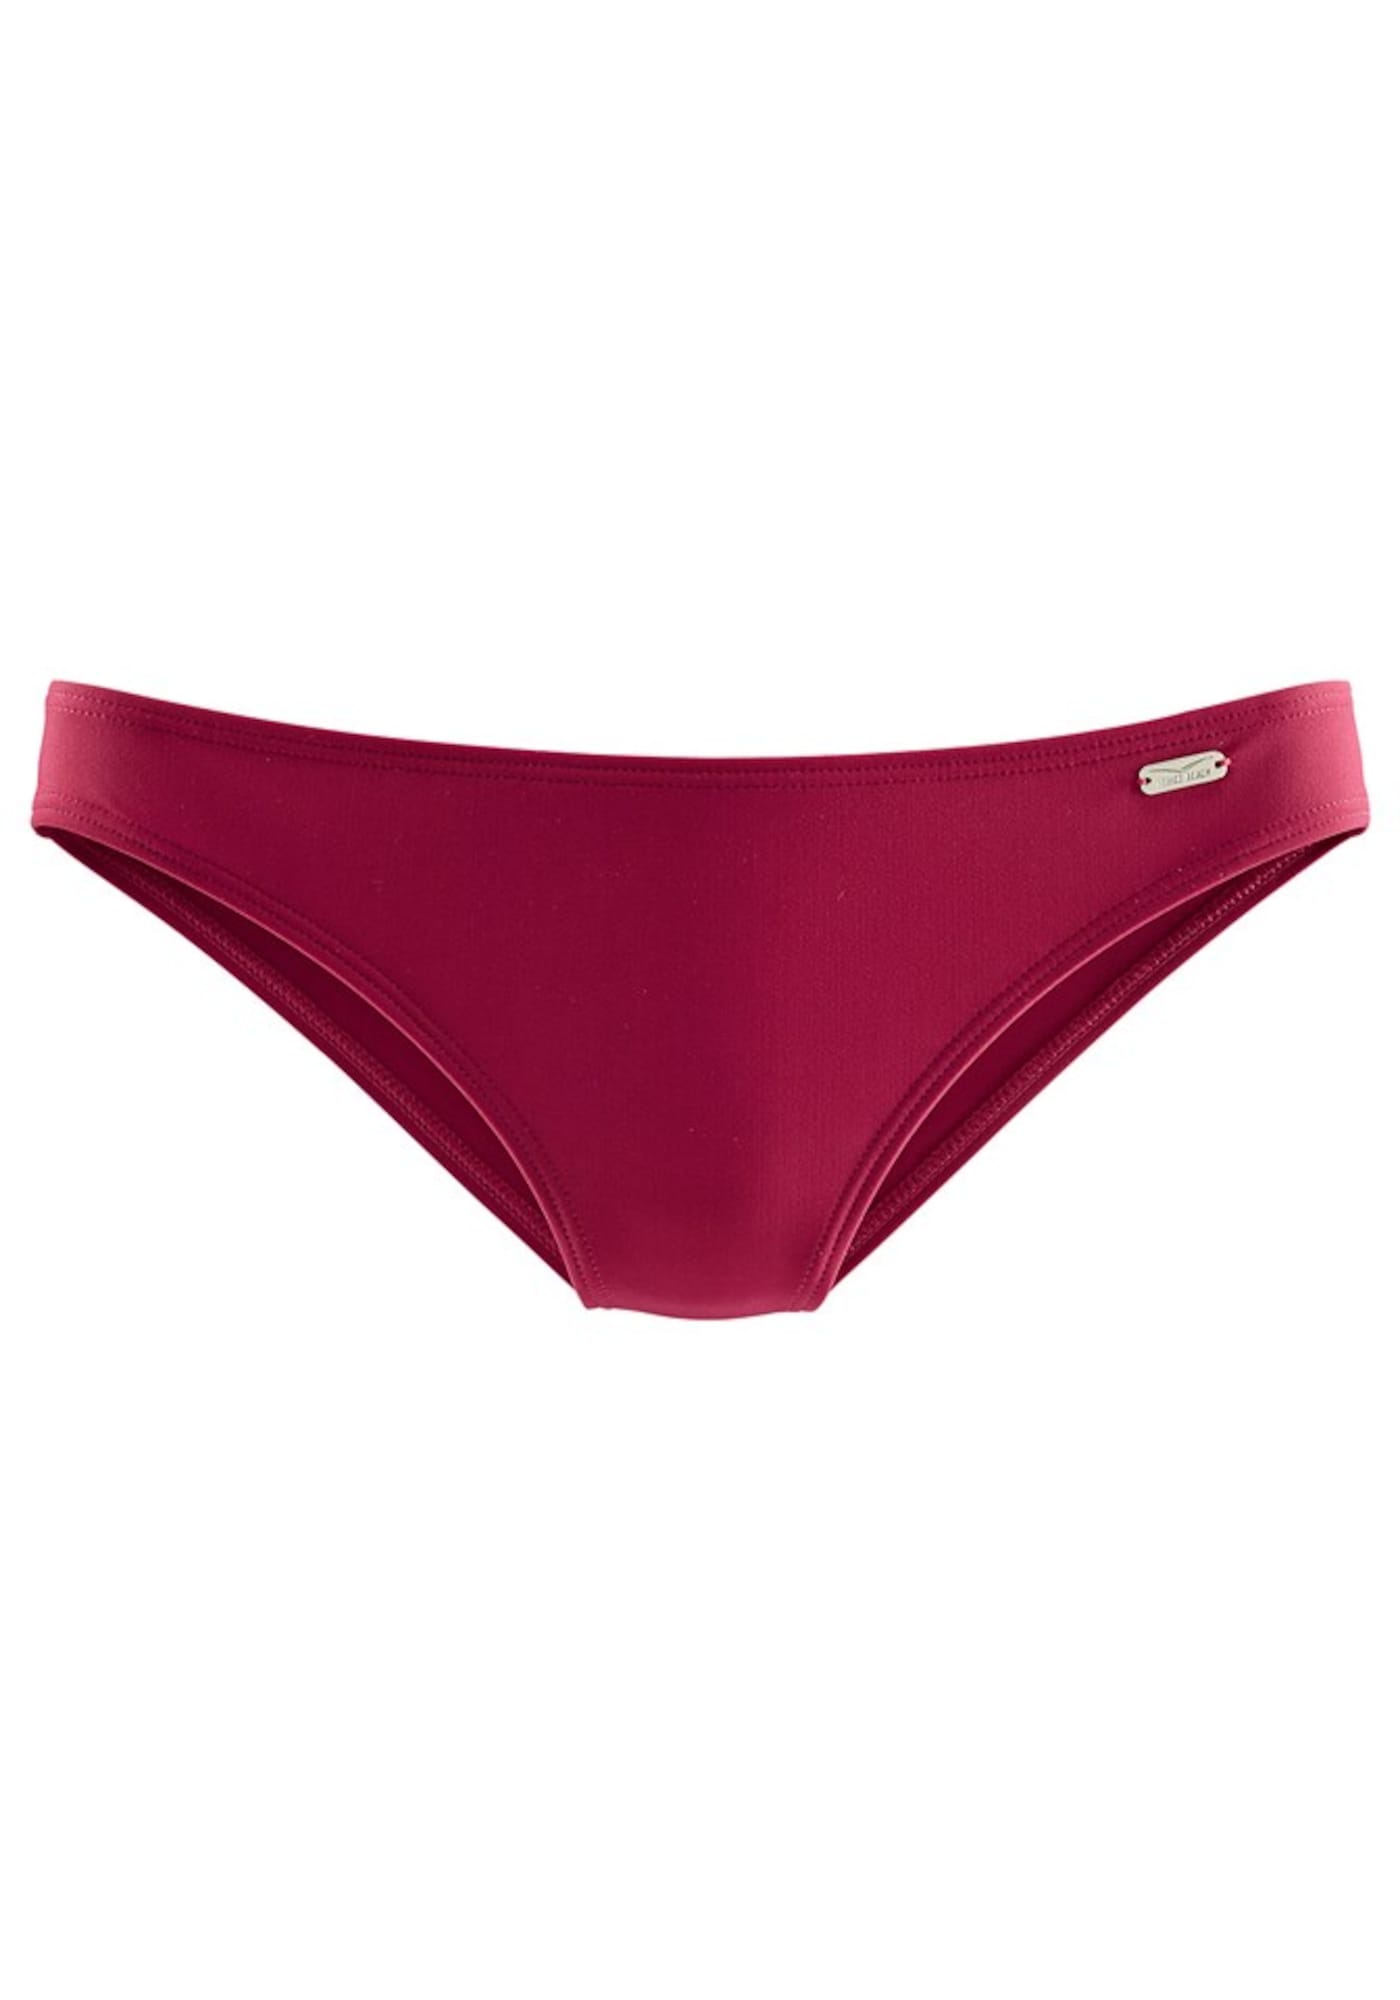 VENICE BEACH Pantaloncini per bikini 'Spring' Rosso